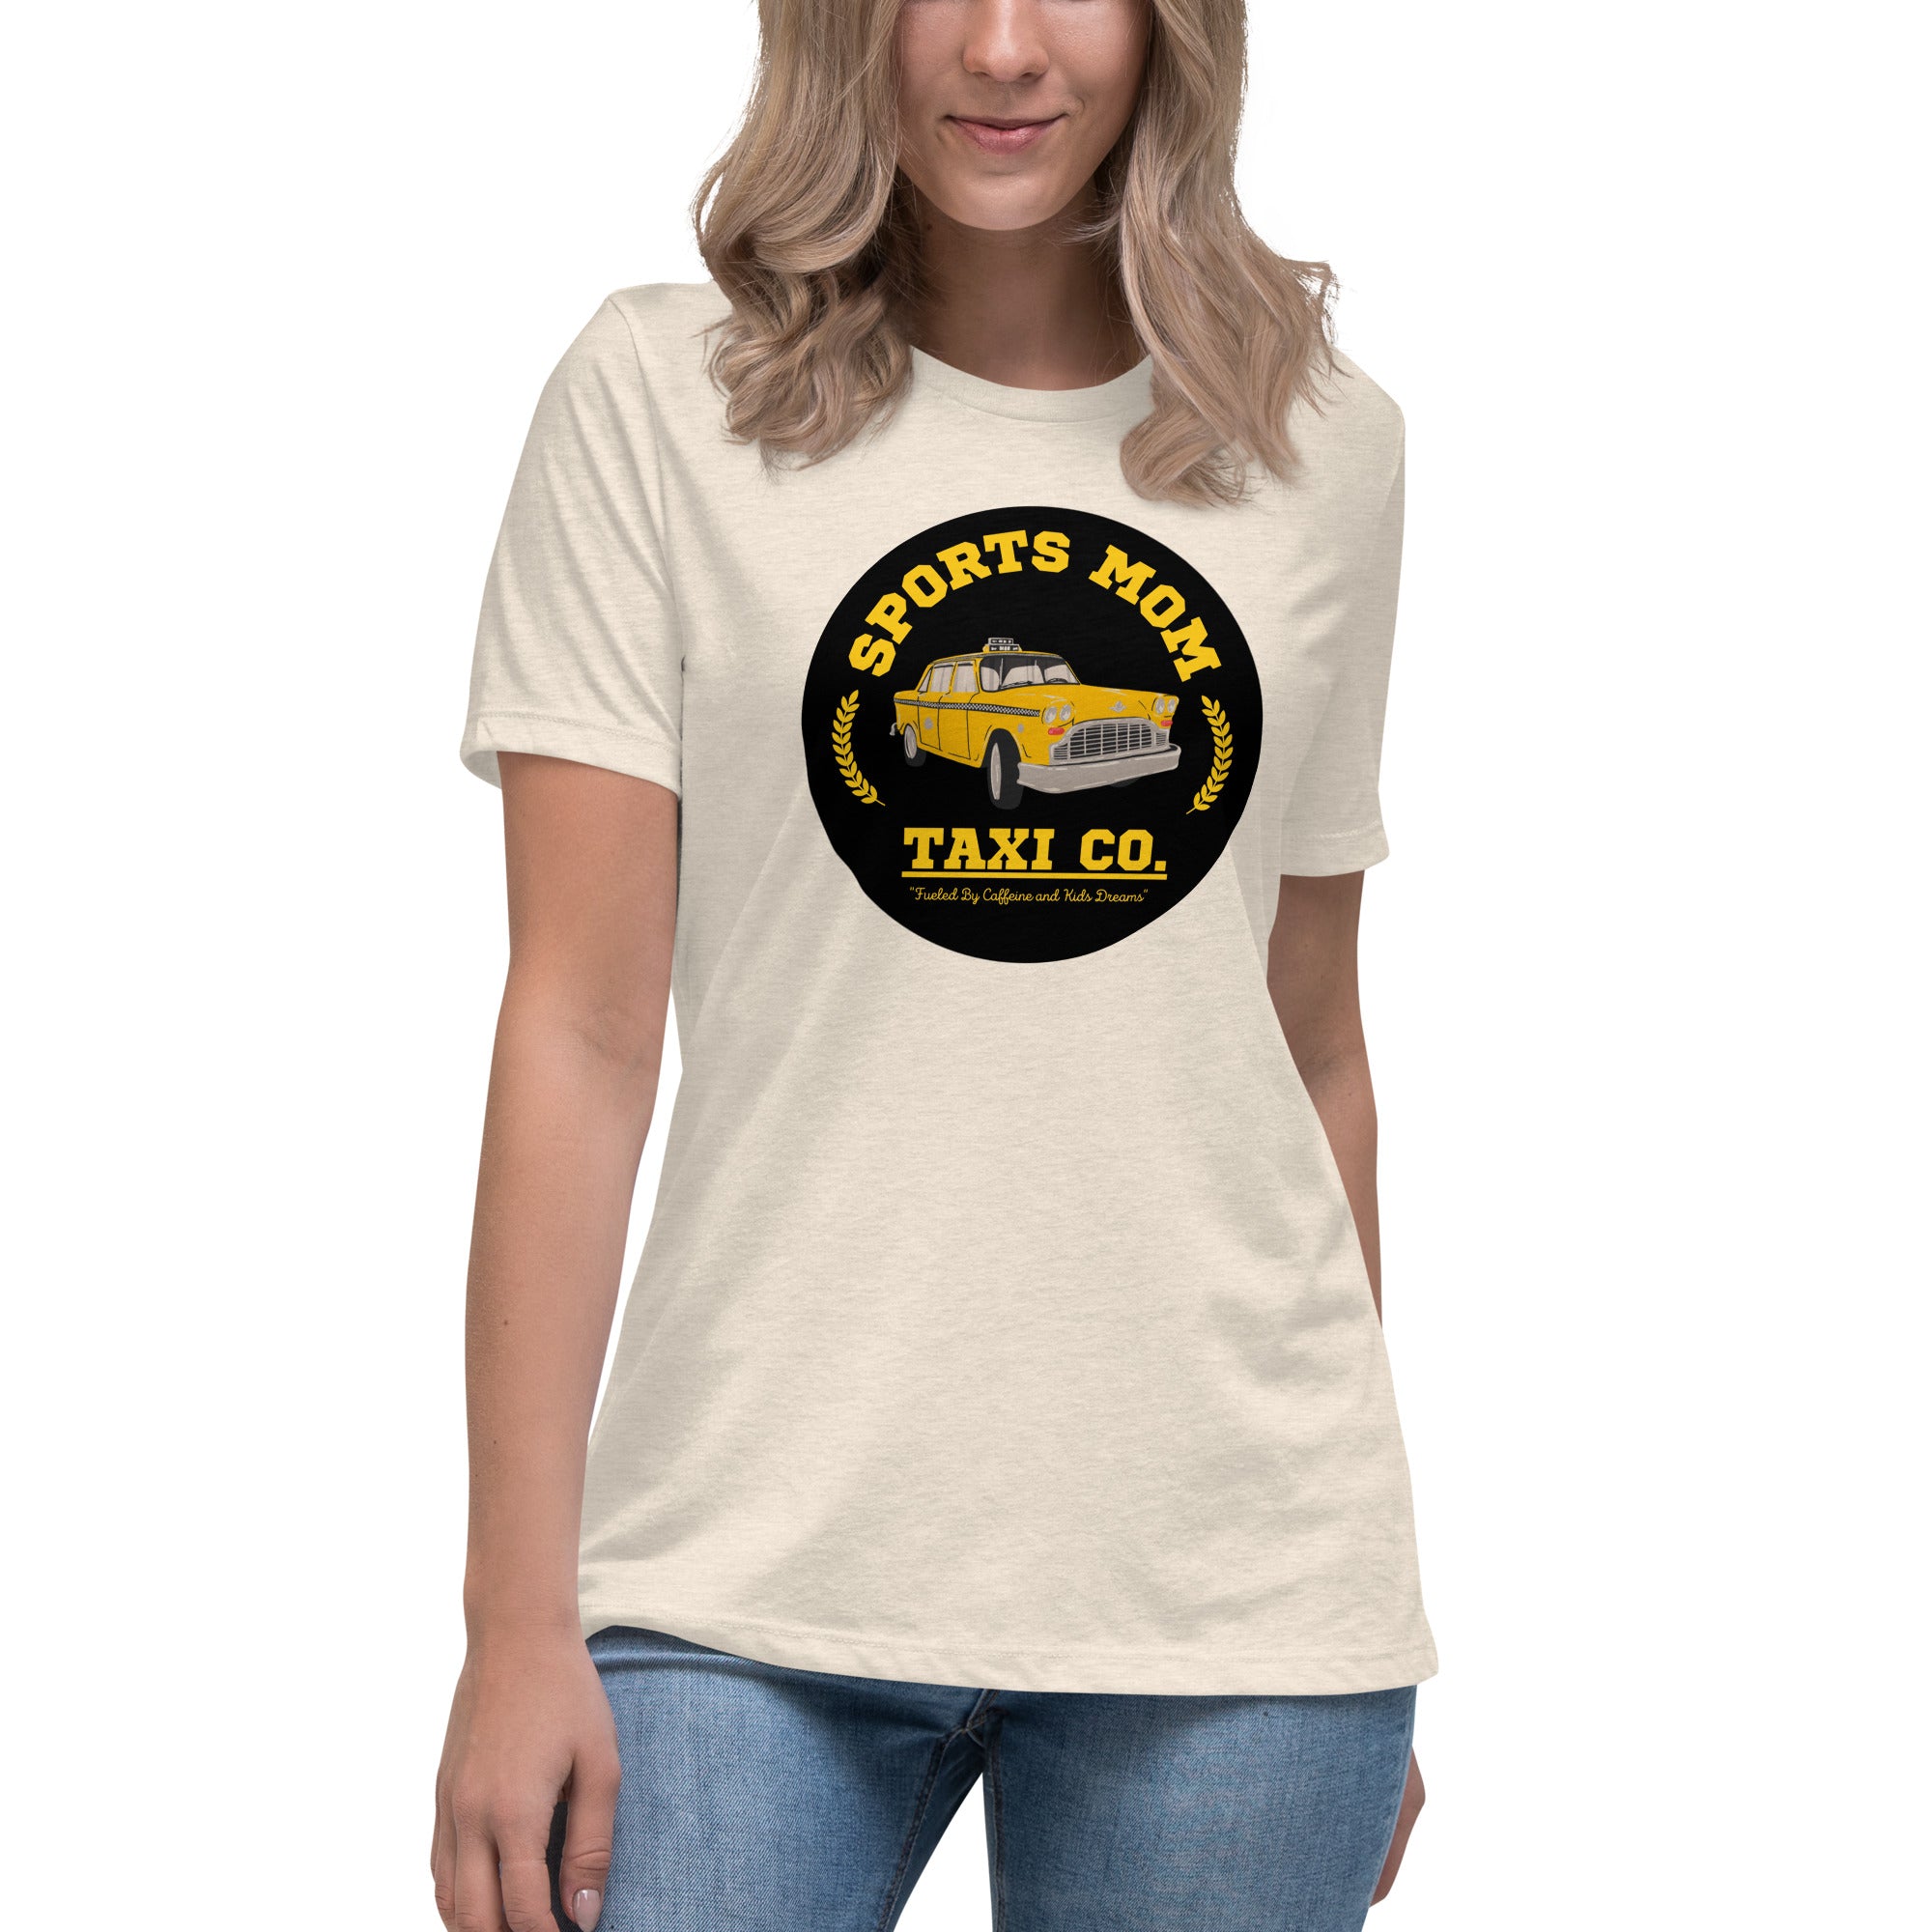 The Sports Mom Taxi Co. Original Premium Fit T-Shirt